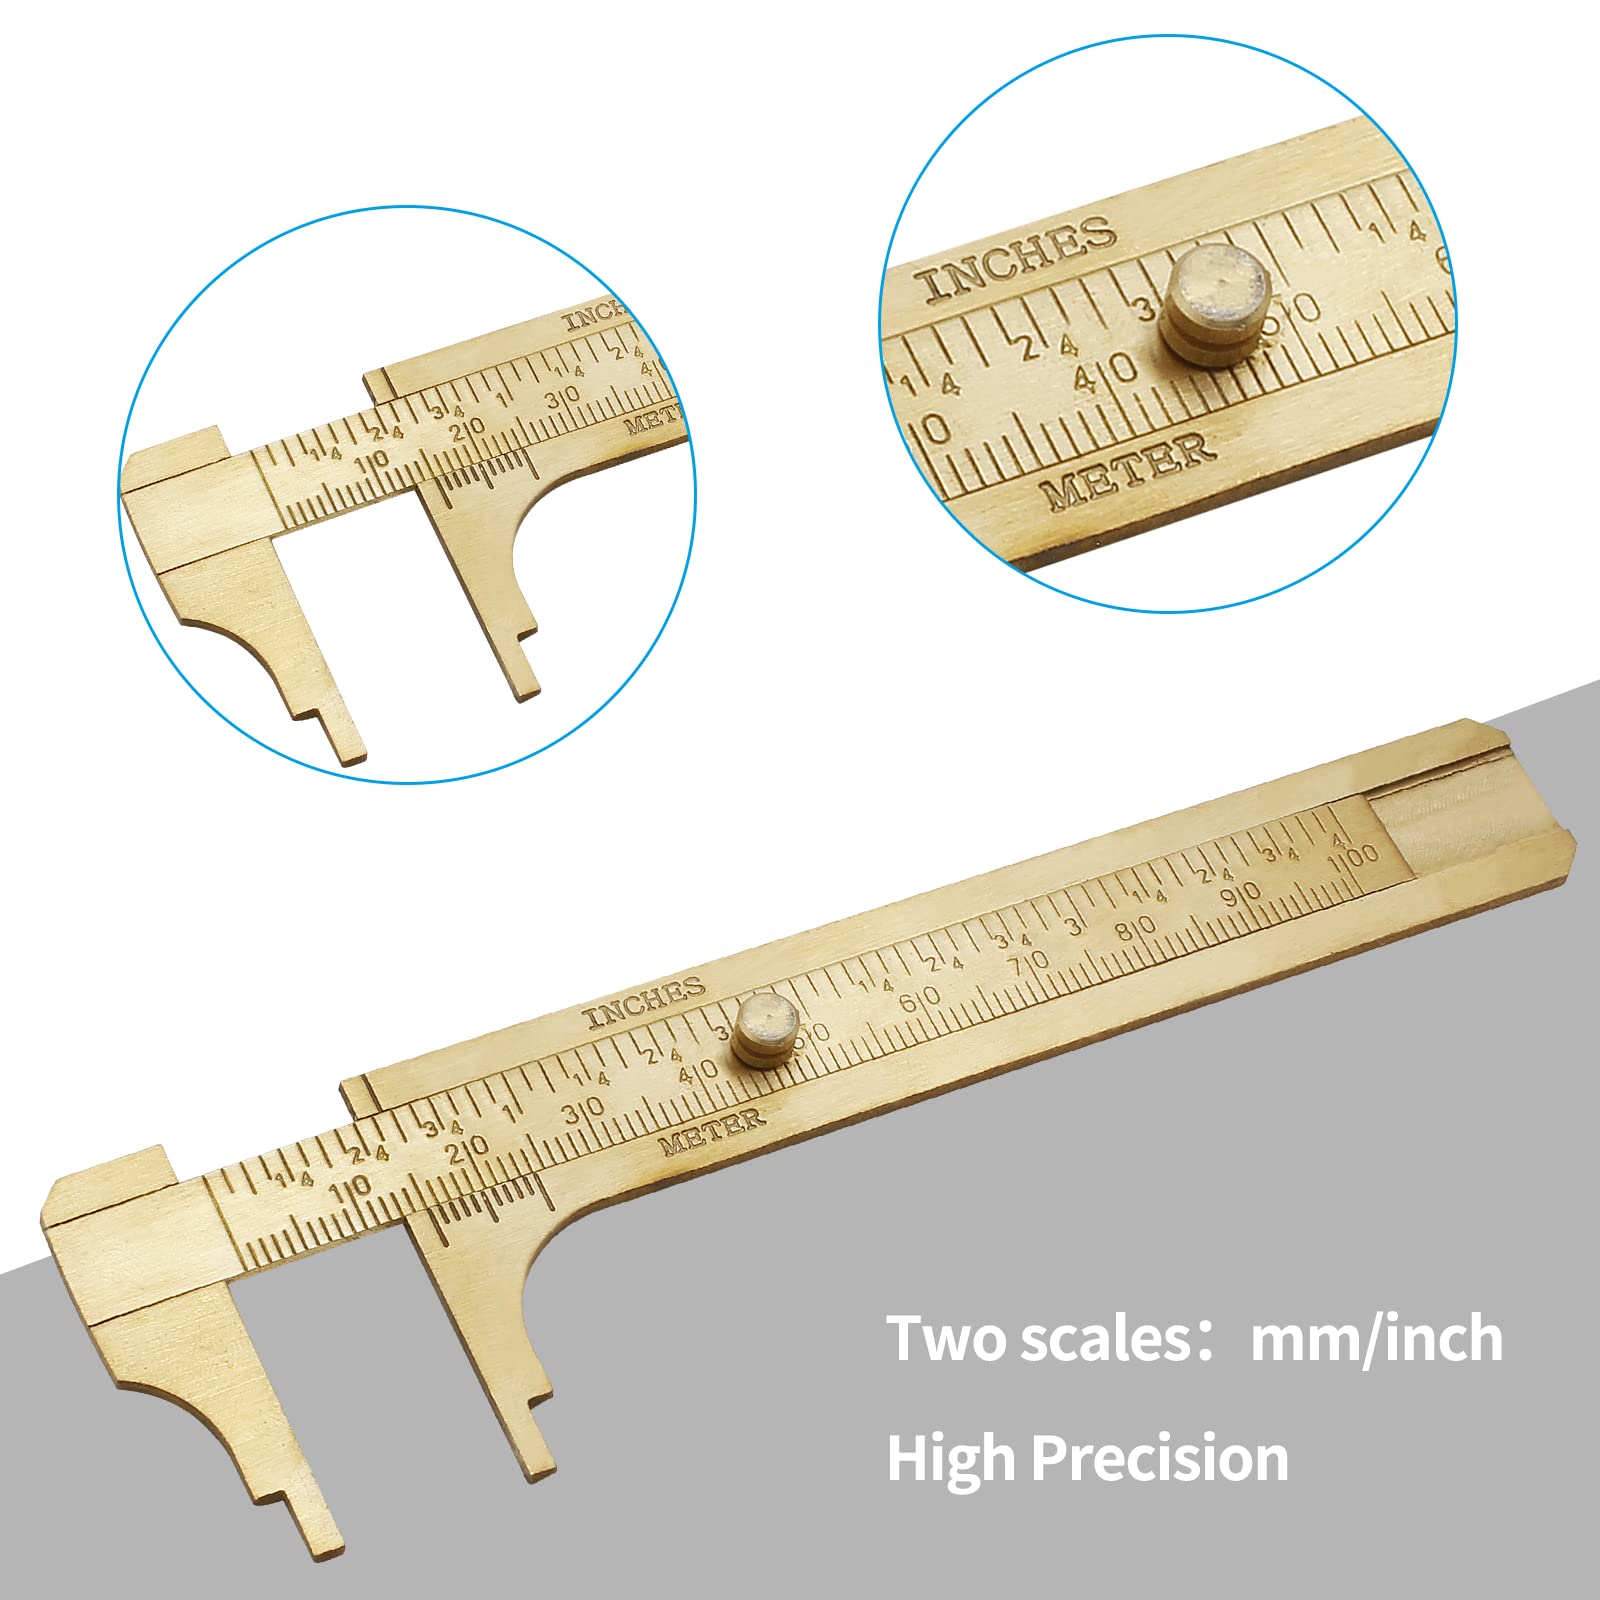 Kyuionty Brass Pocket Vernier Caliper Ruler, Sliding Gauge Mini Vernier Caliper Double Scales MM/Inch Measuring Tool (100mm)